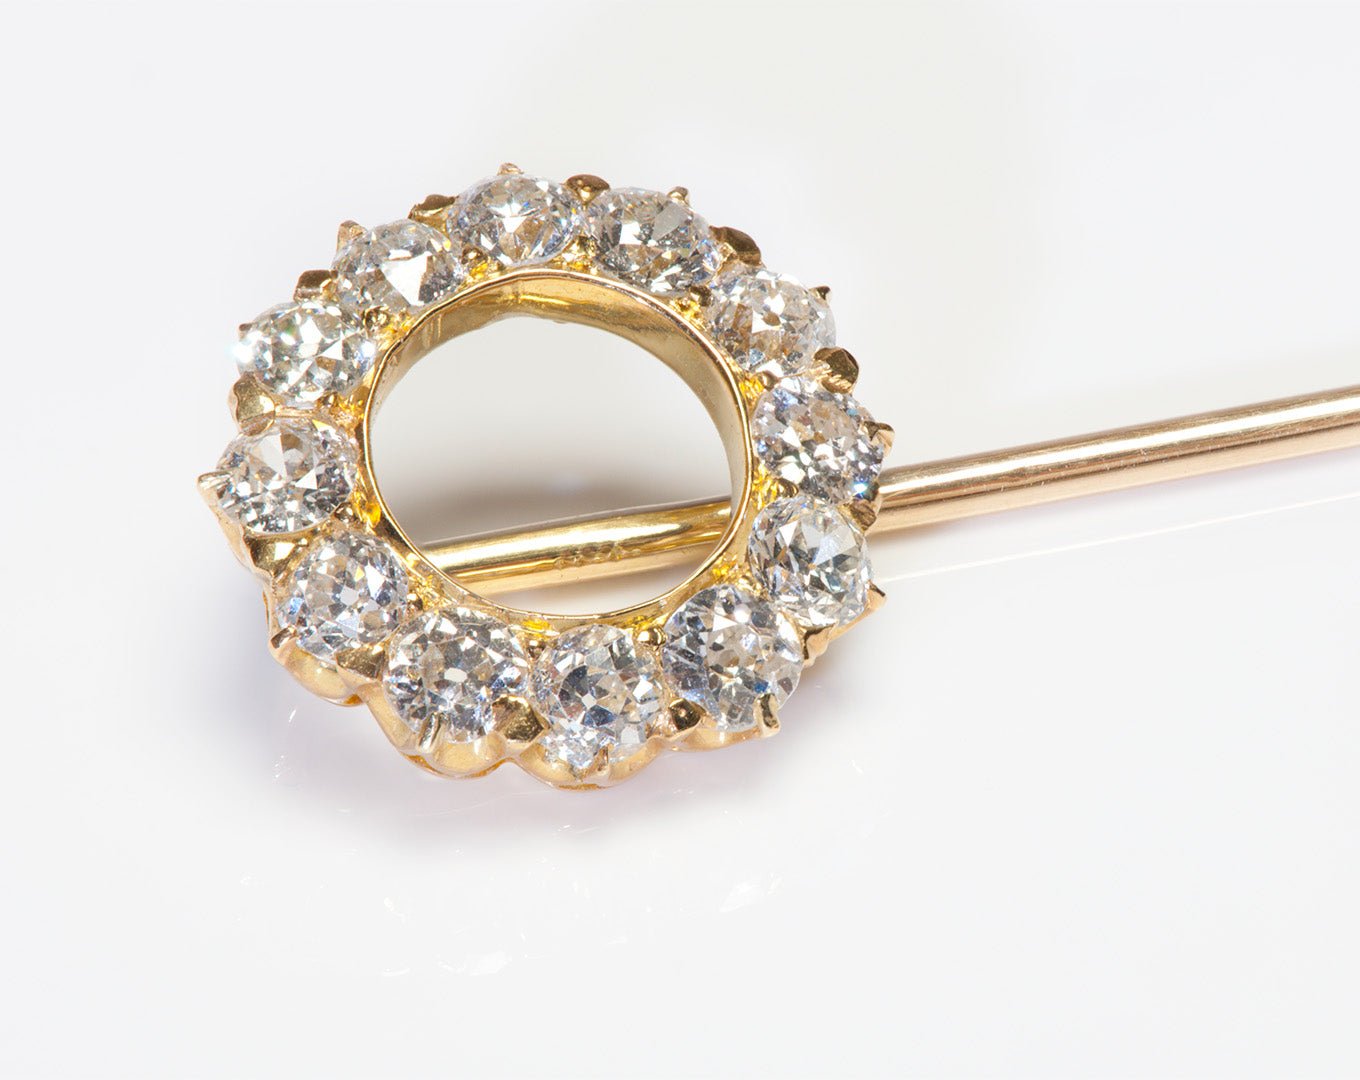 Antique Tiffany & Co. Gold Old Mine Cut Diamond Stick Pin